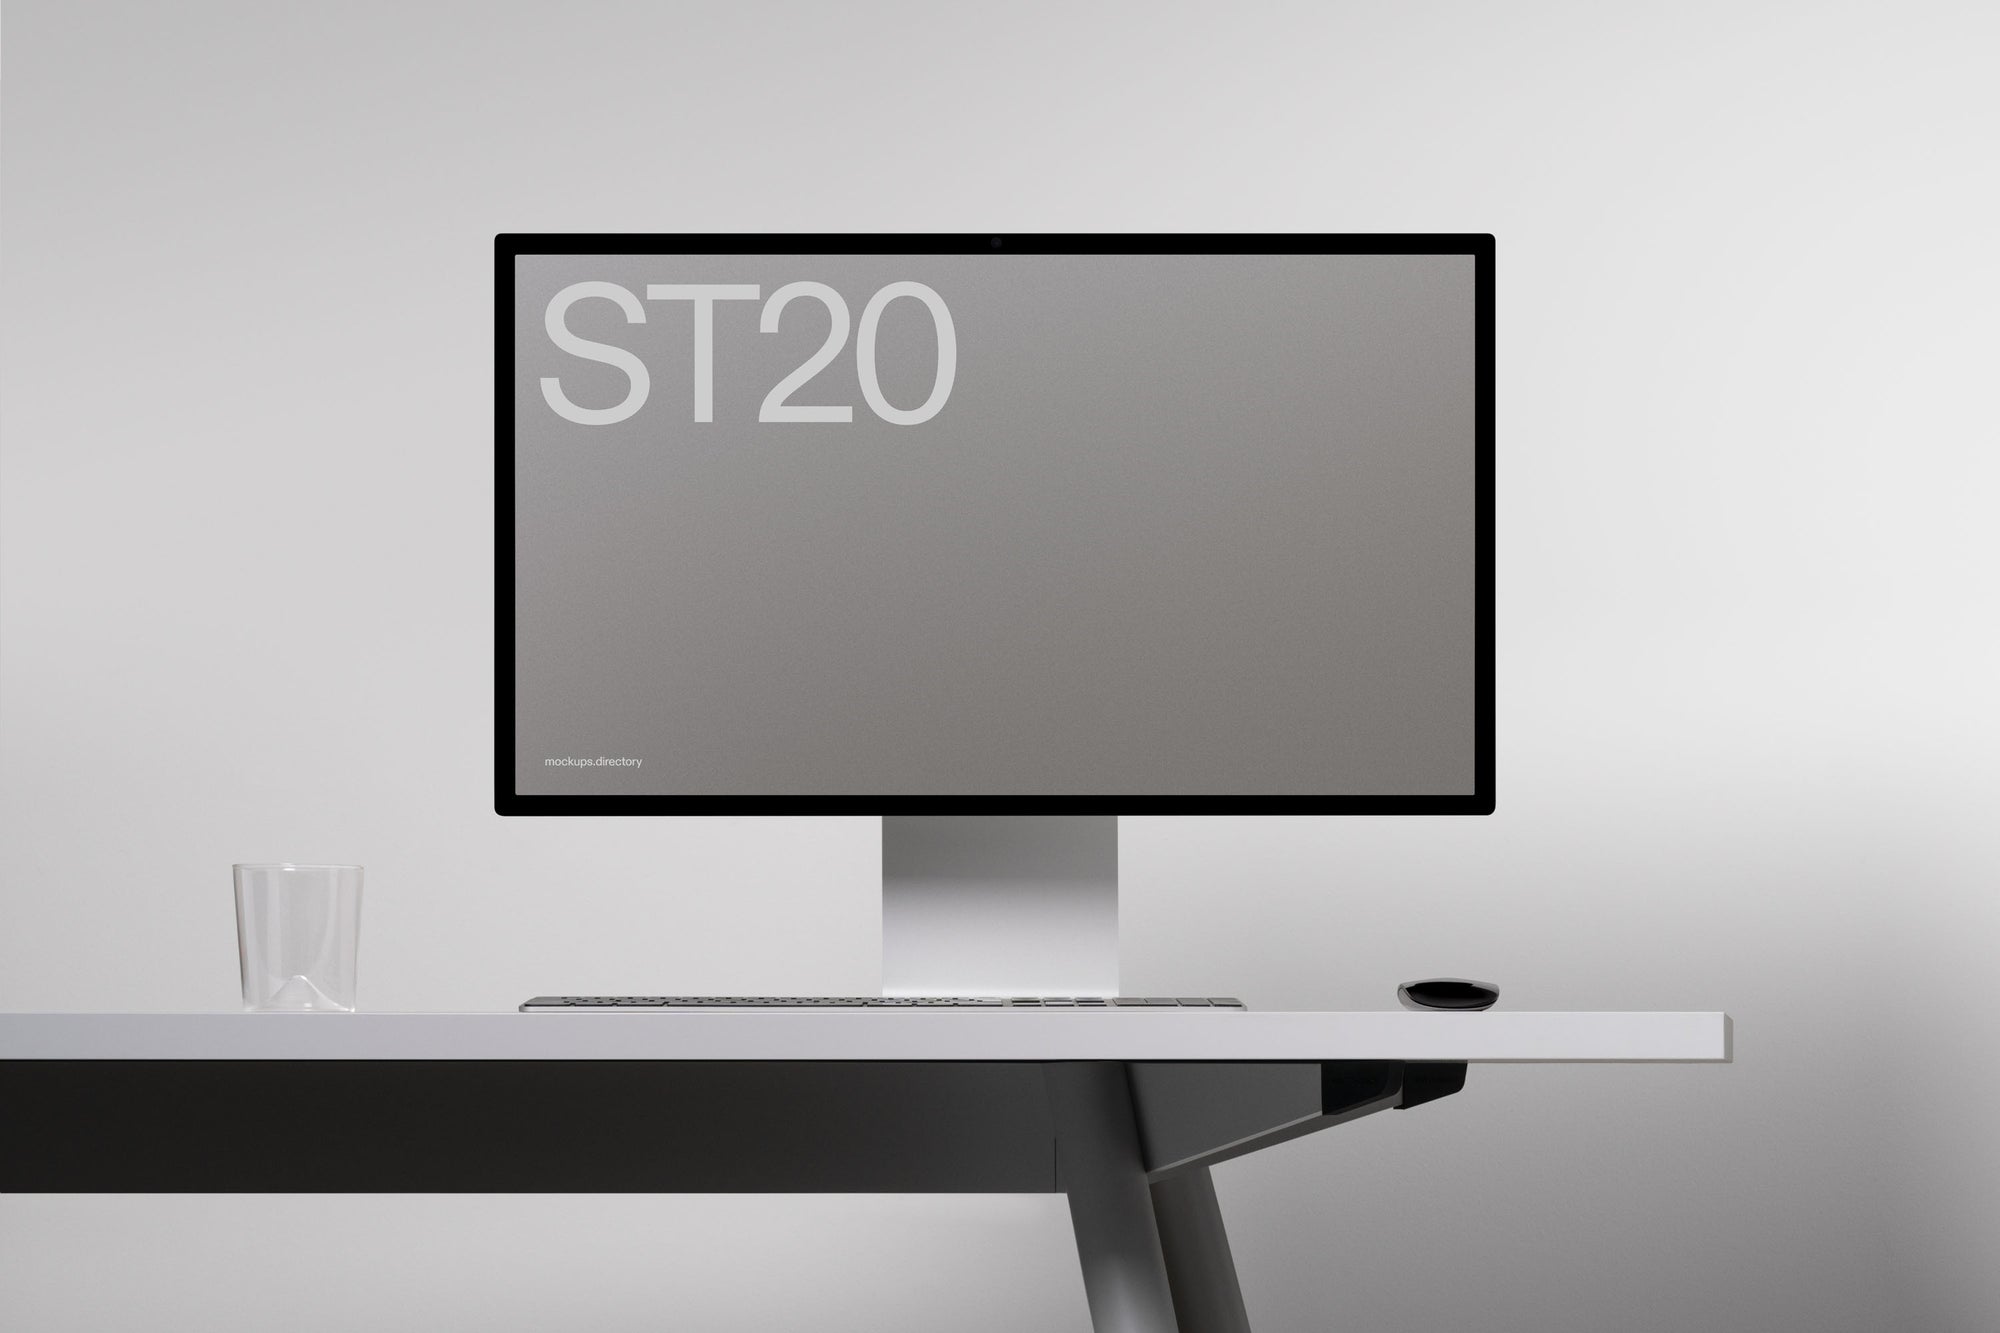 ST20 — Studio Display